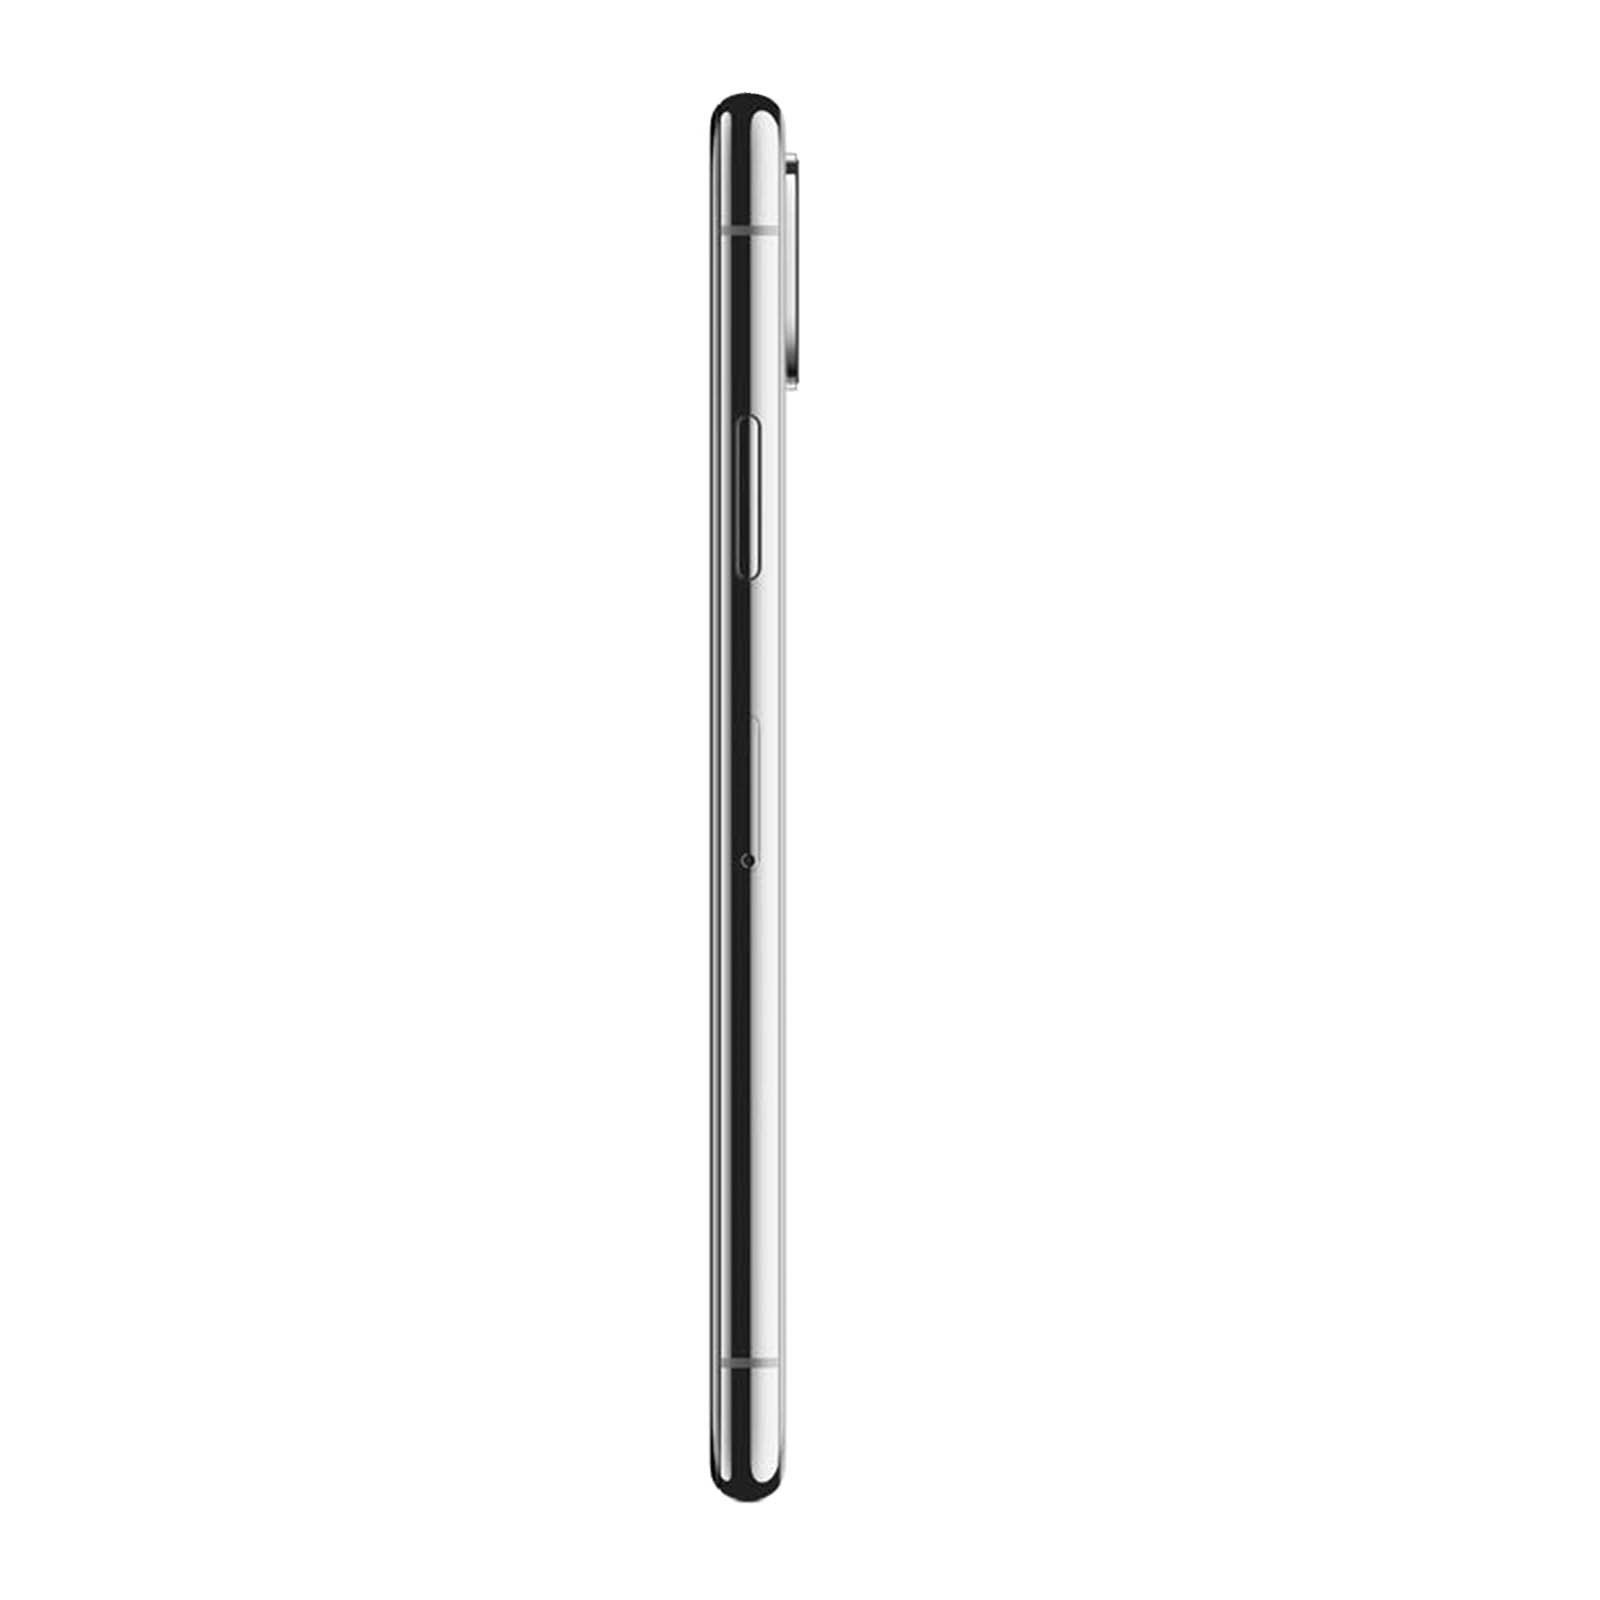 Apple iPhone XS Max 512GB Silver Good - Unlocked